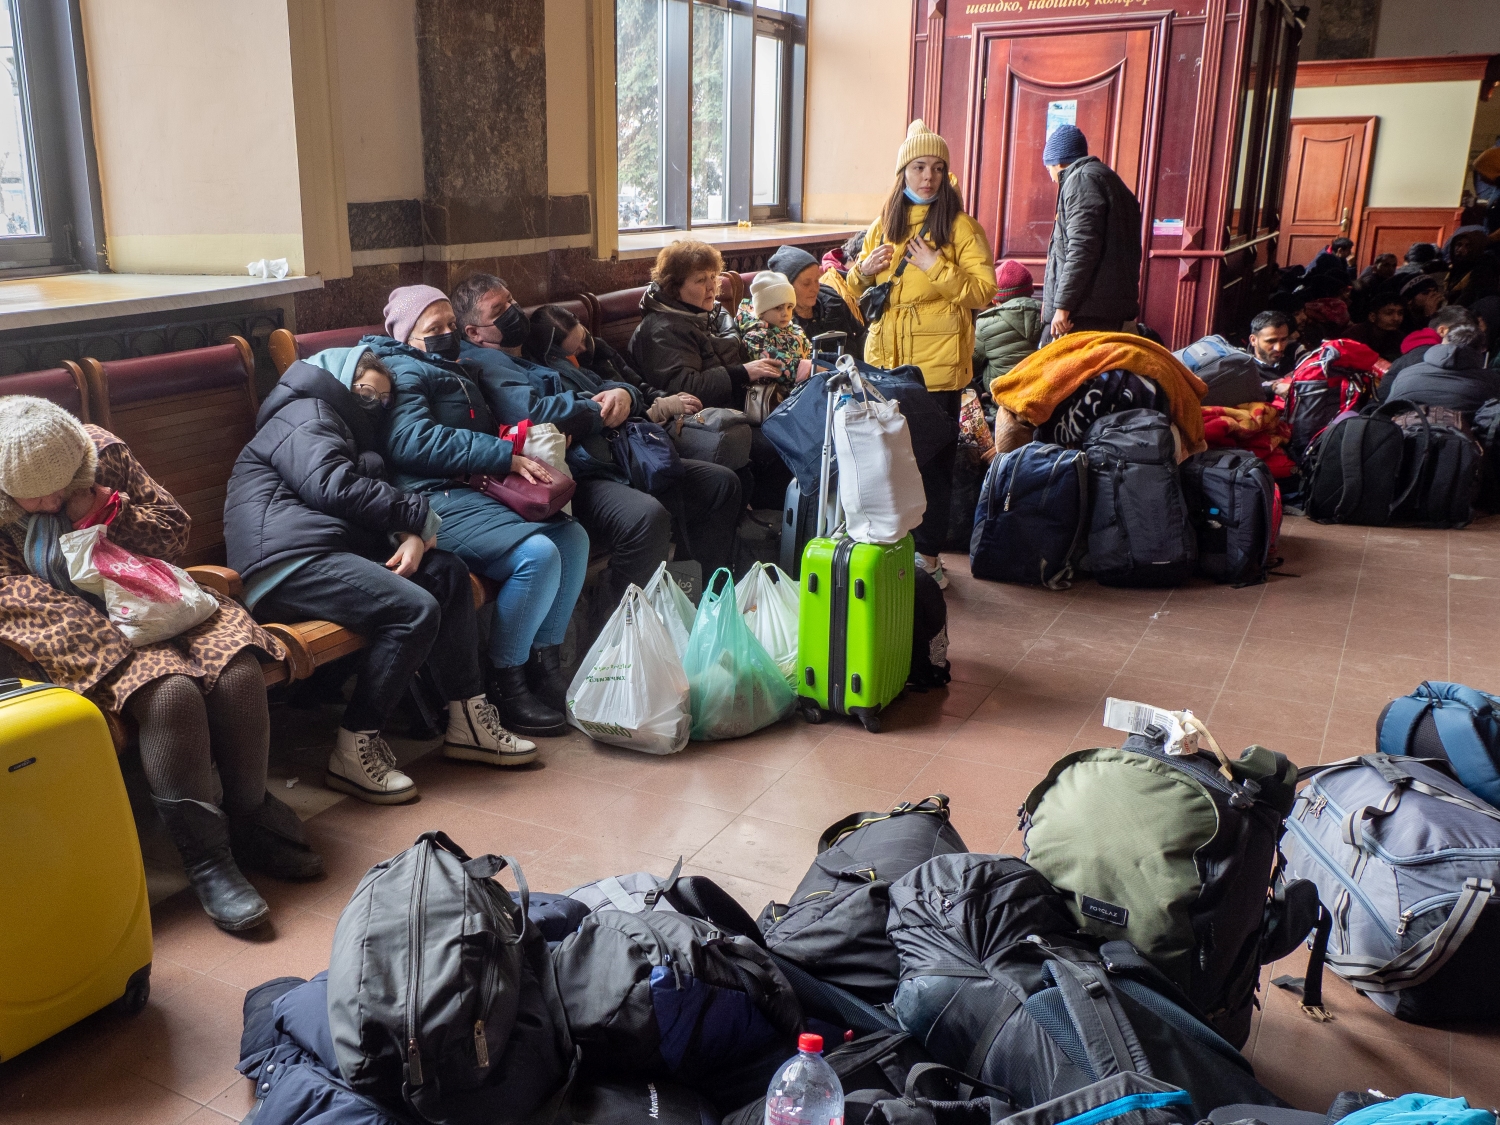 Ukrainian refugees huddle together with luggage while in transit. 